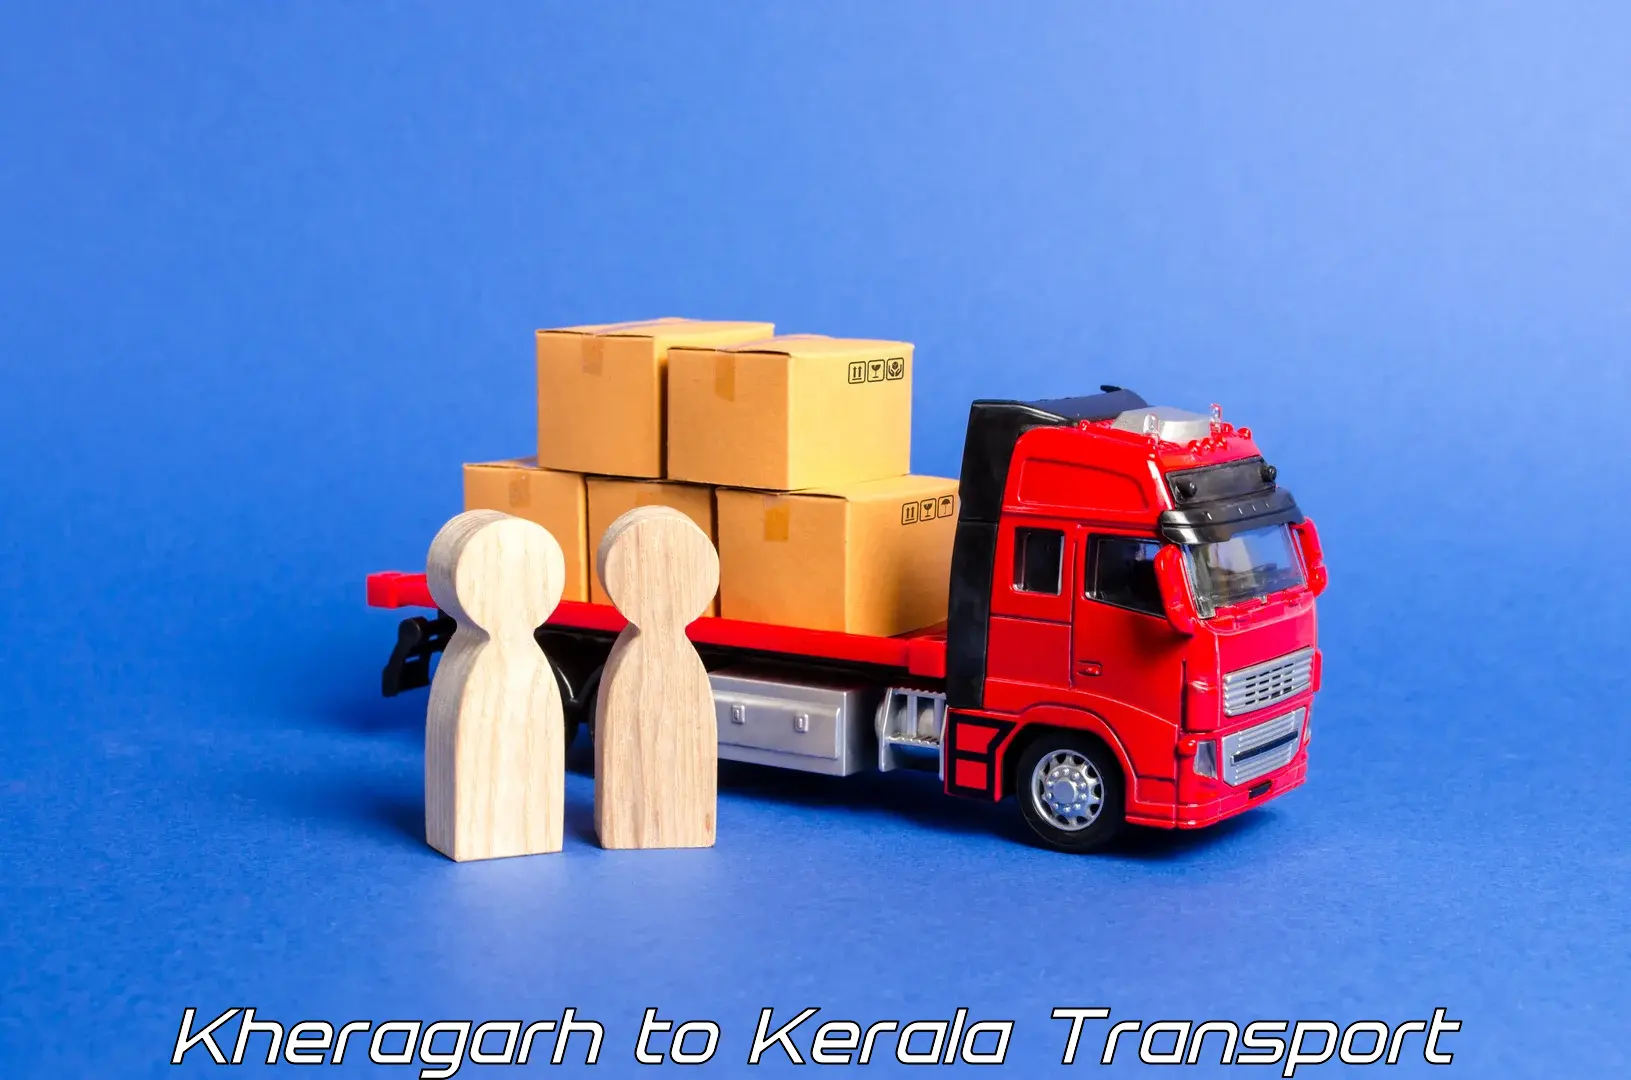 Daily transport service Kheragarh to Alakode